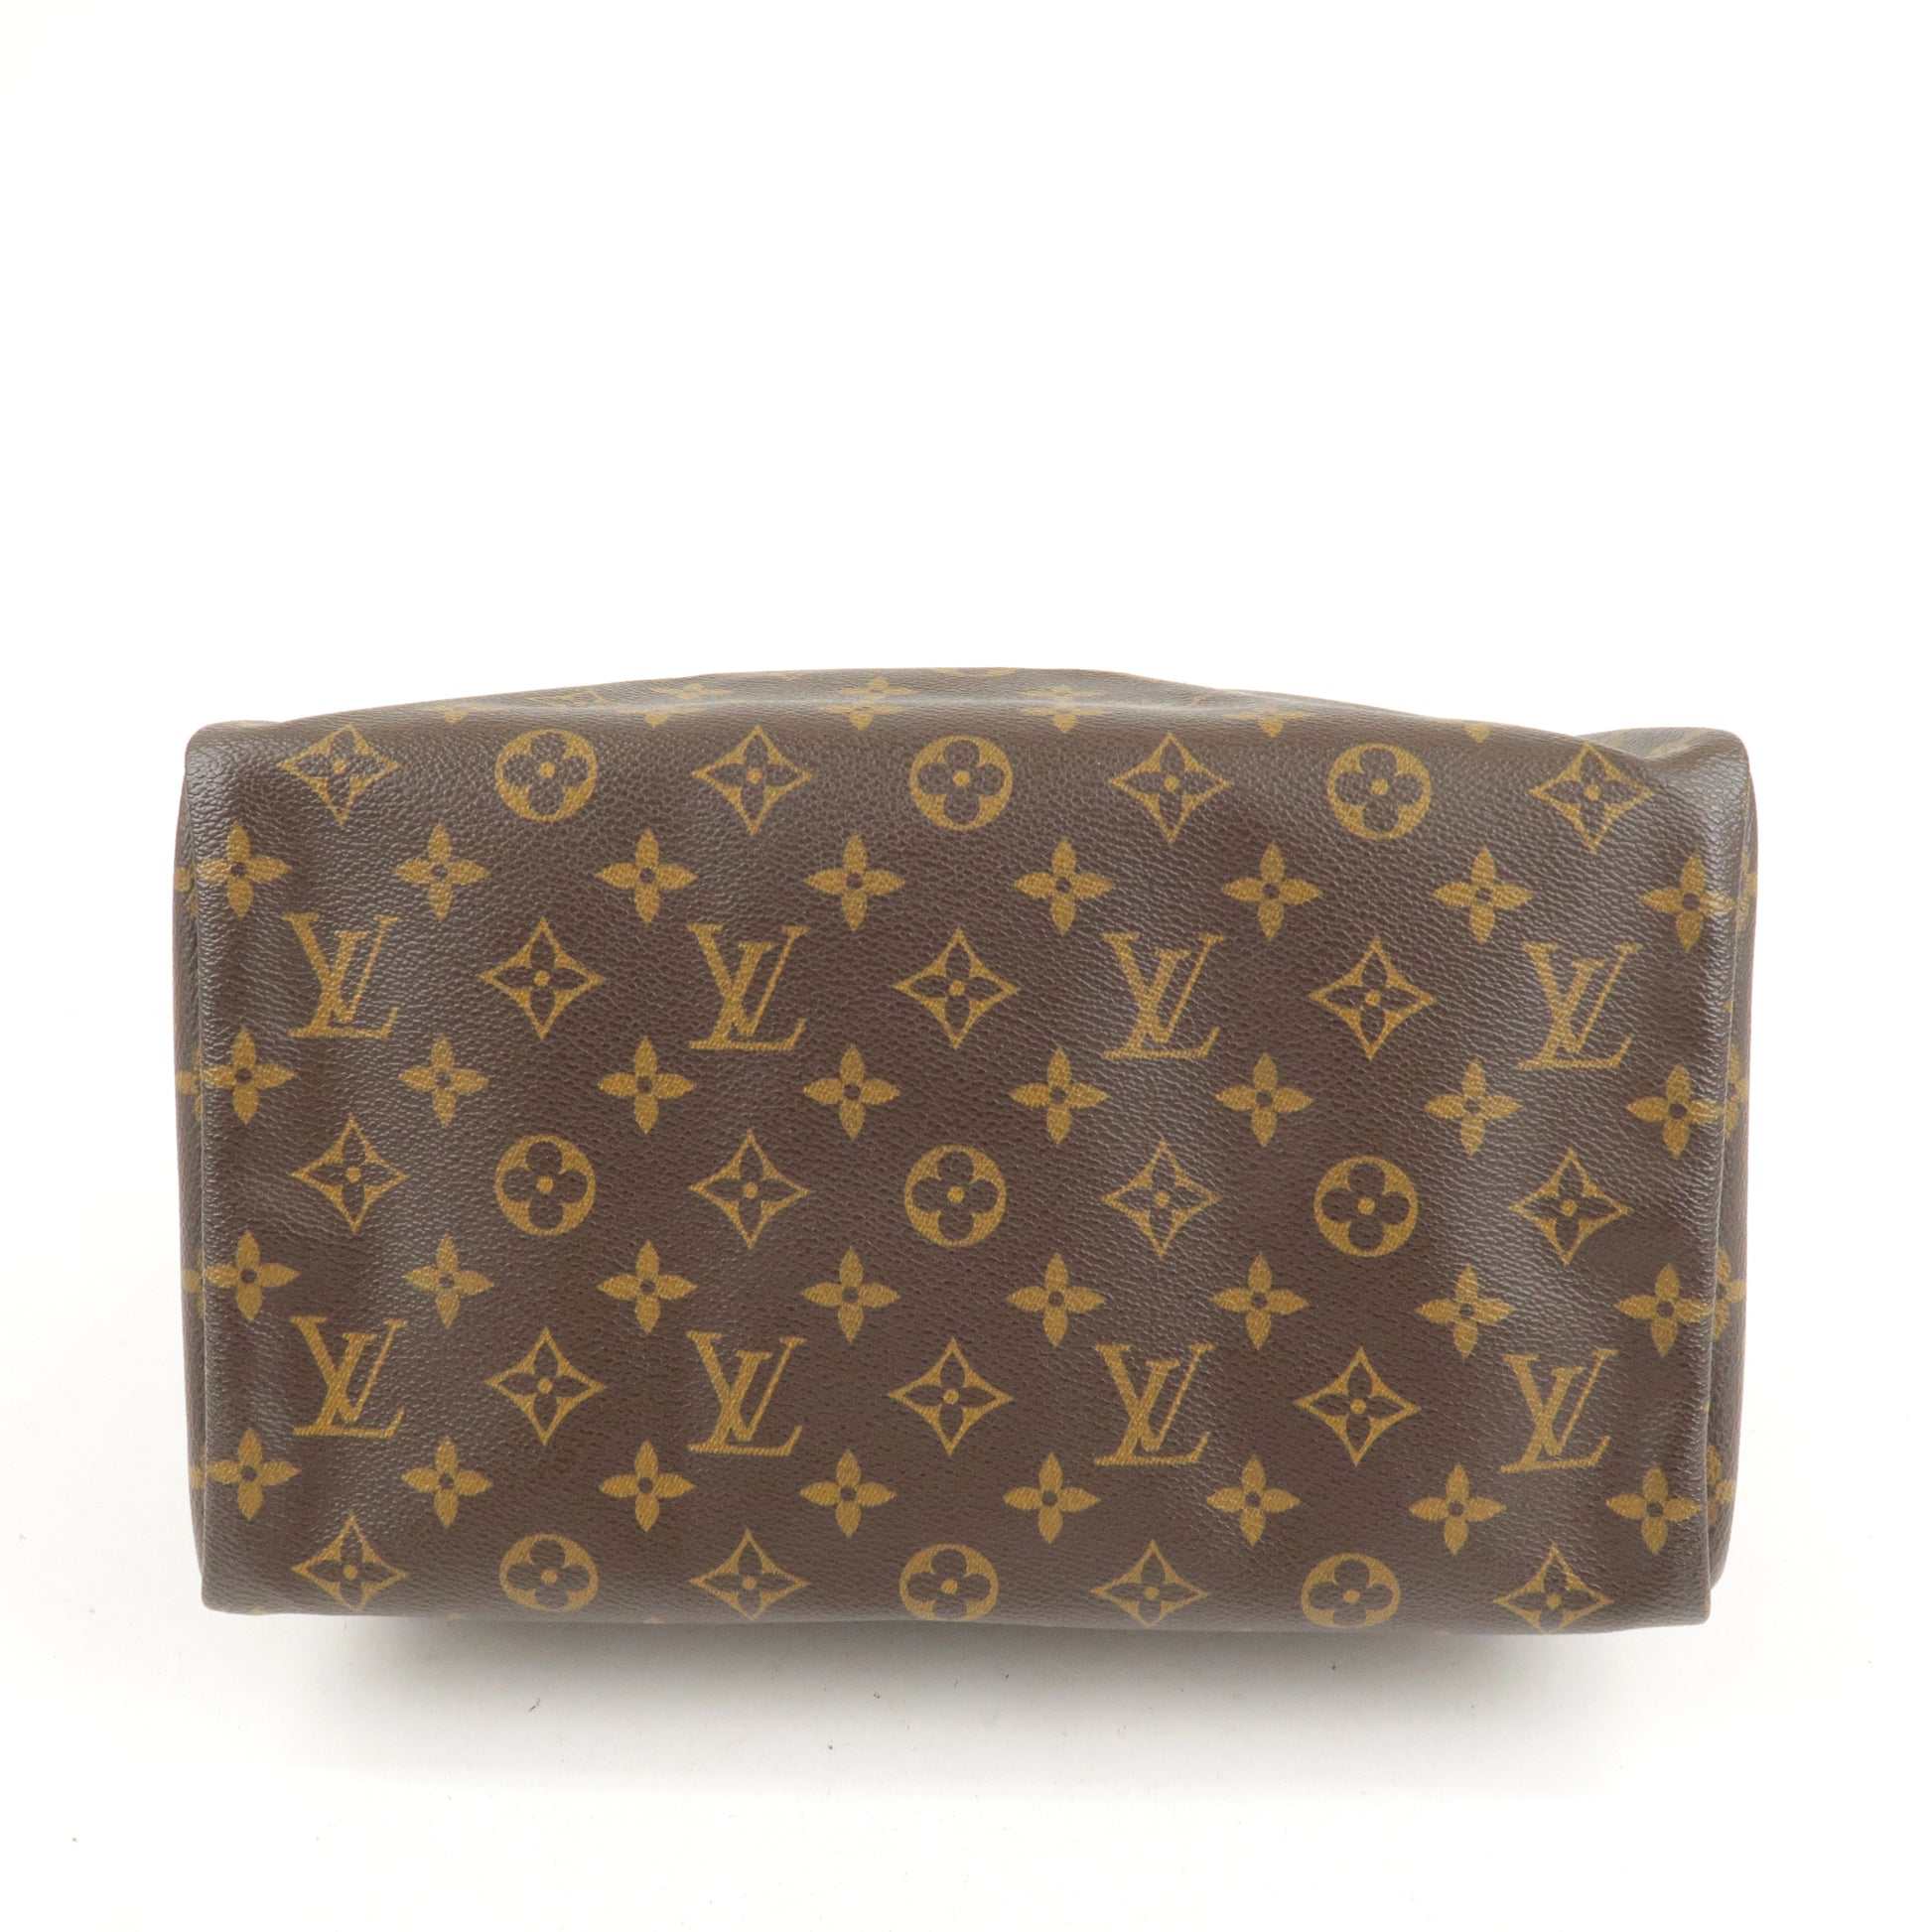 M41526 – dct - ep_vintage luxury Store - Monogram - Bag - Bag